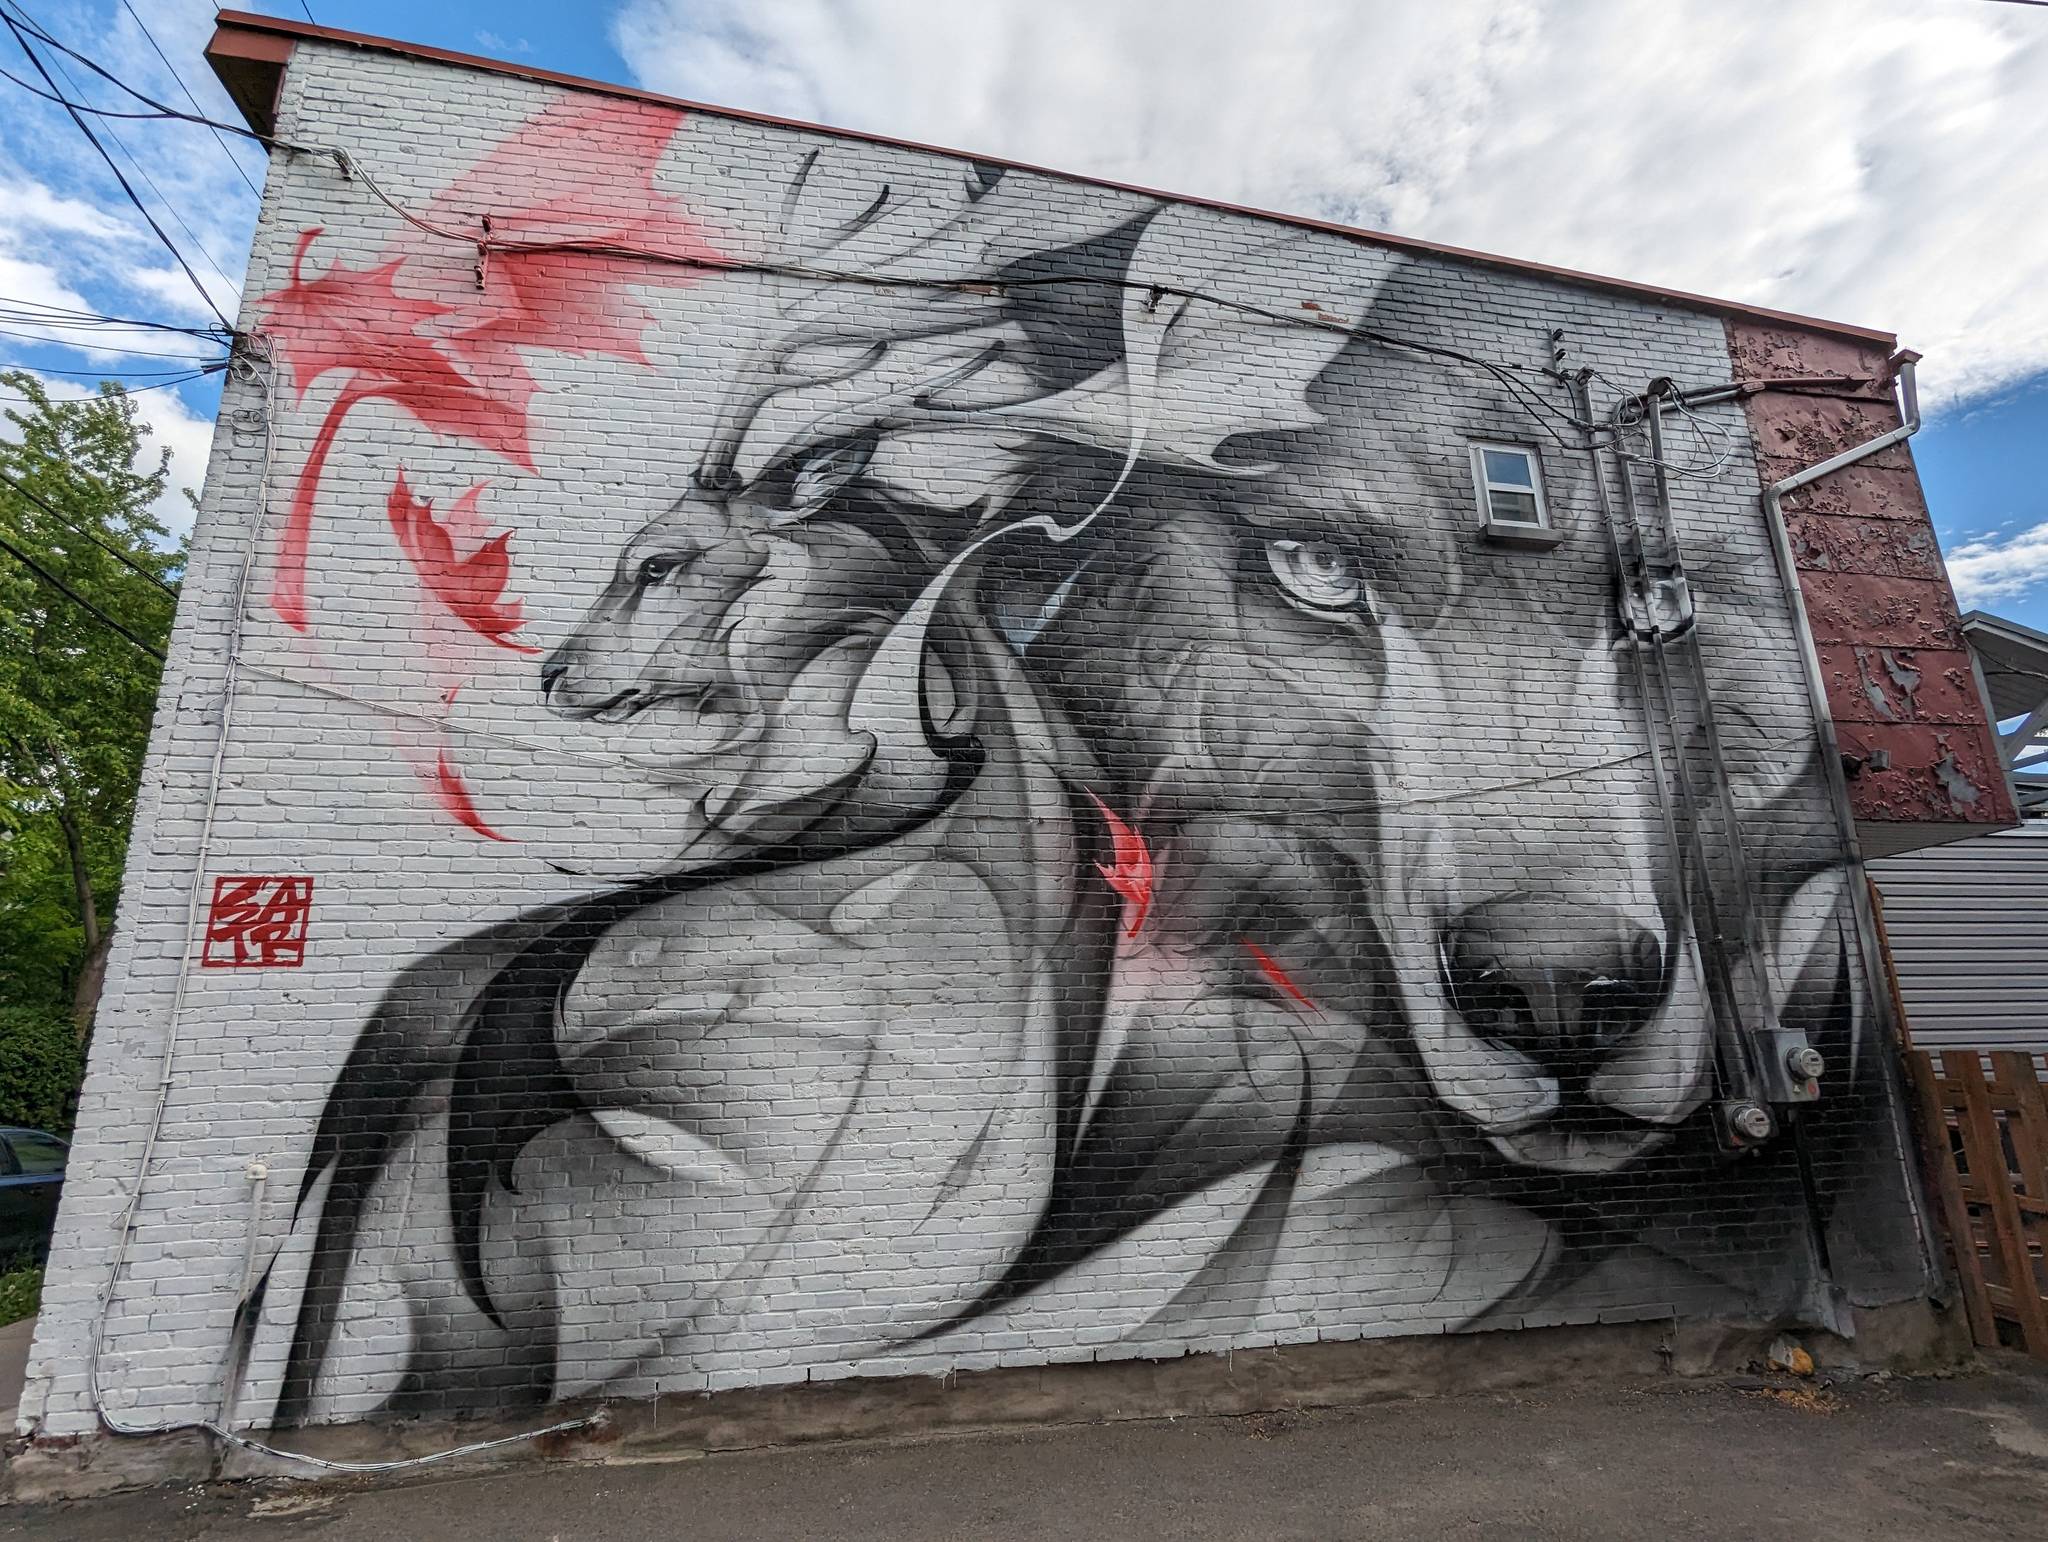 Satr, Street Art In Action&mdash;Canada